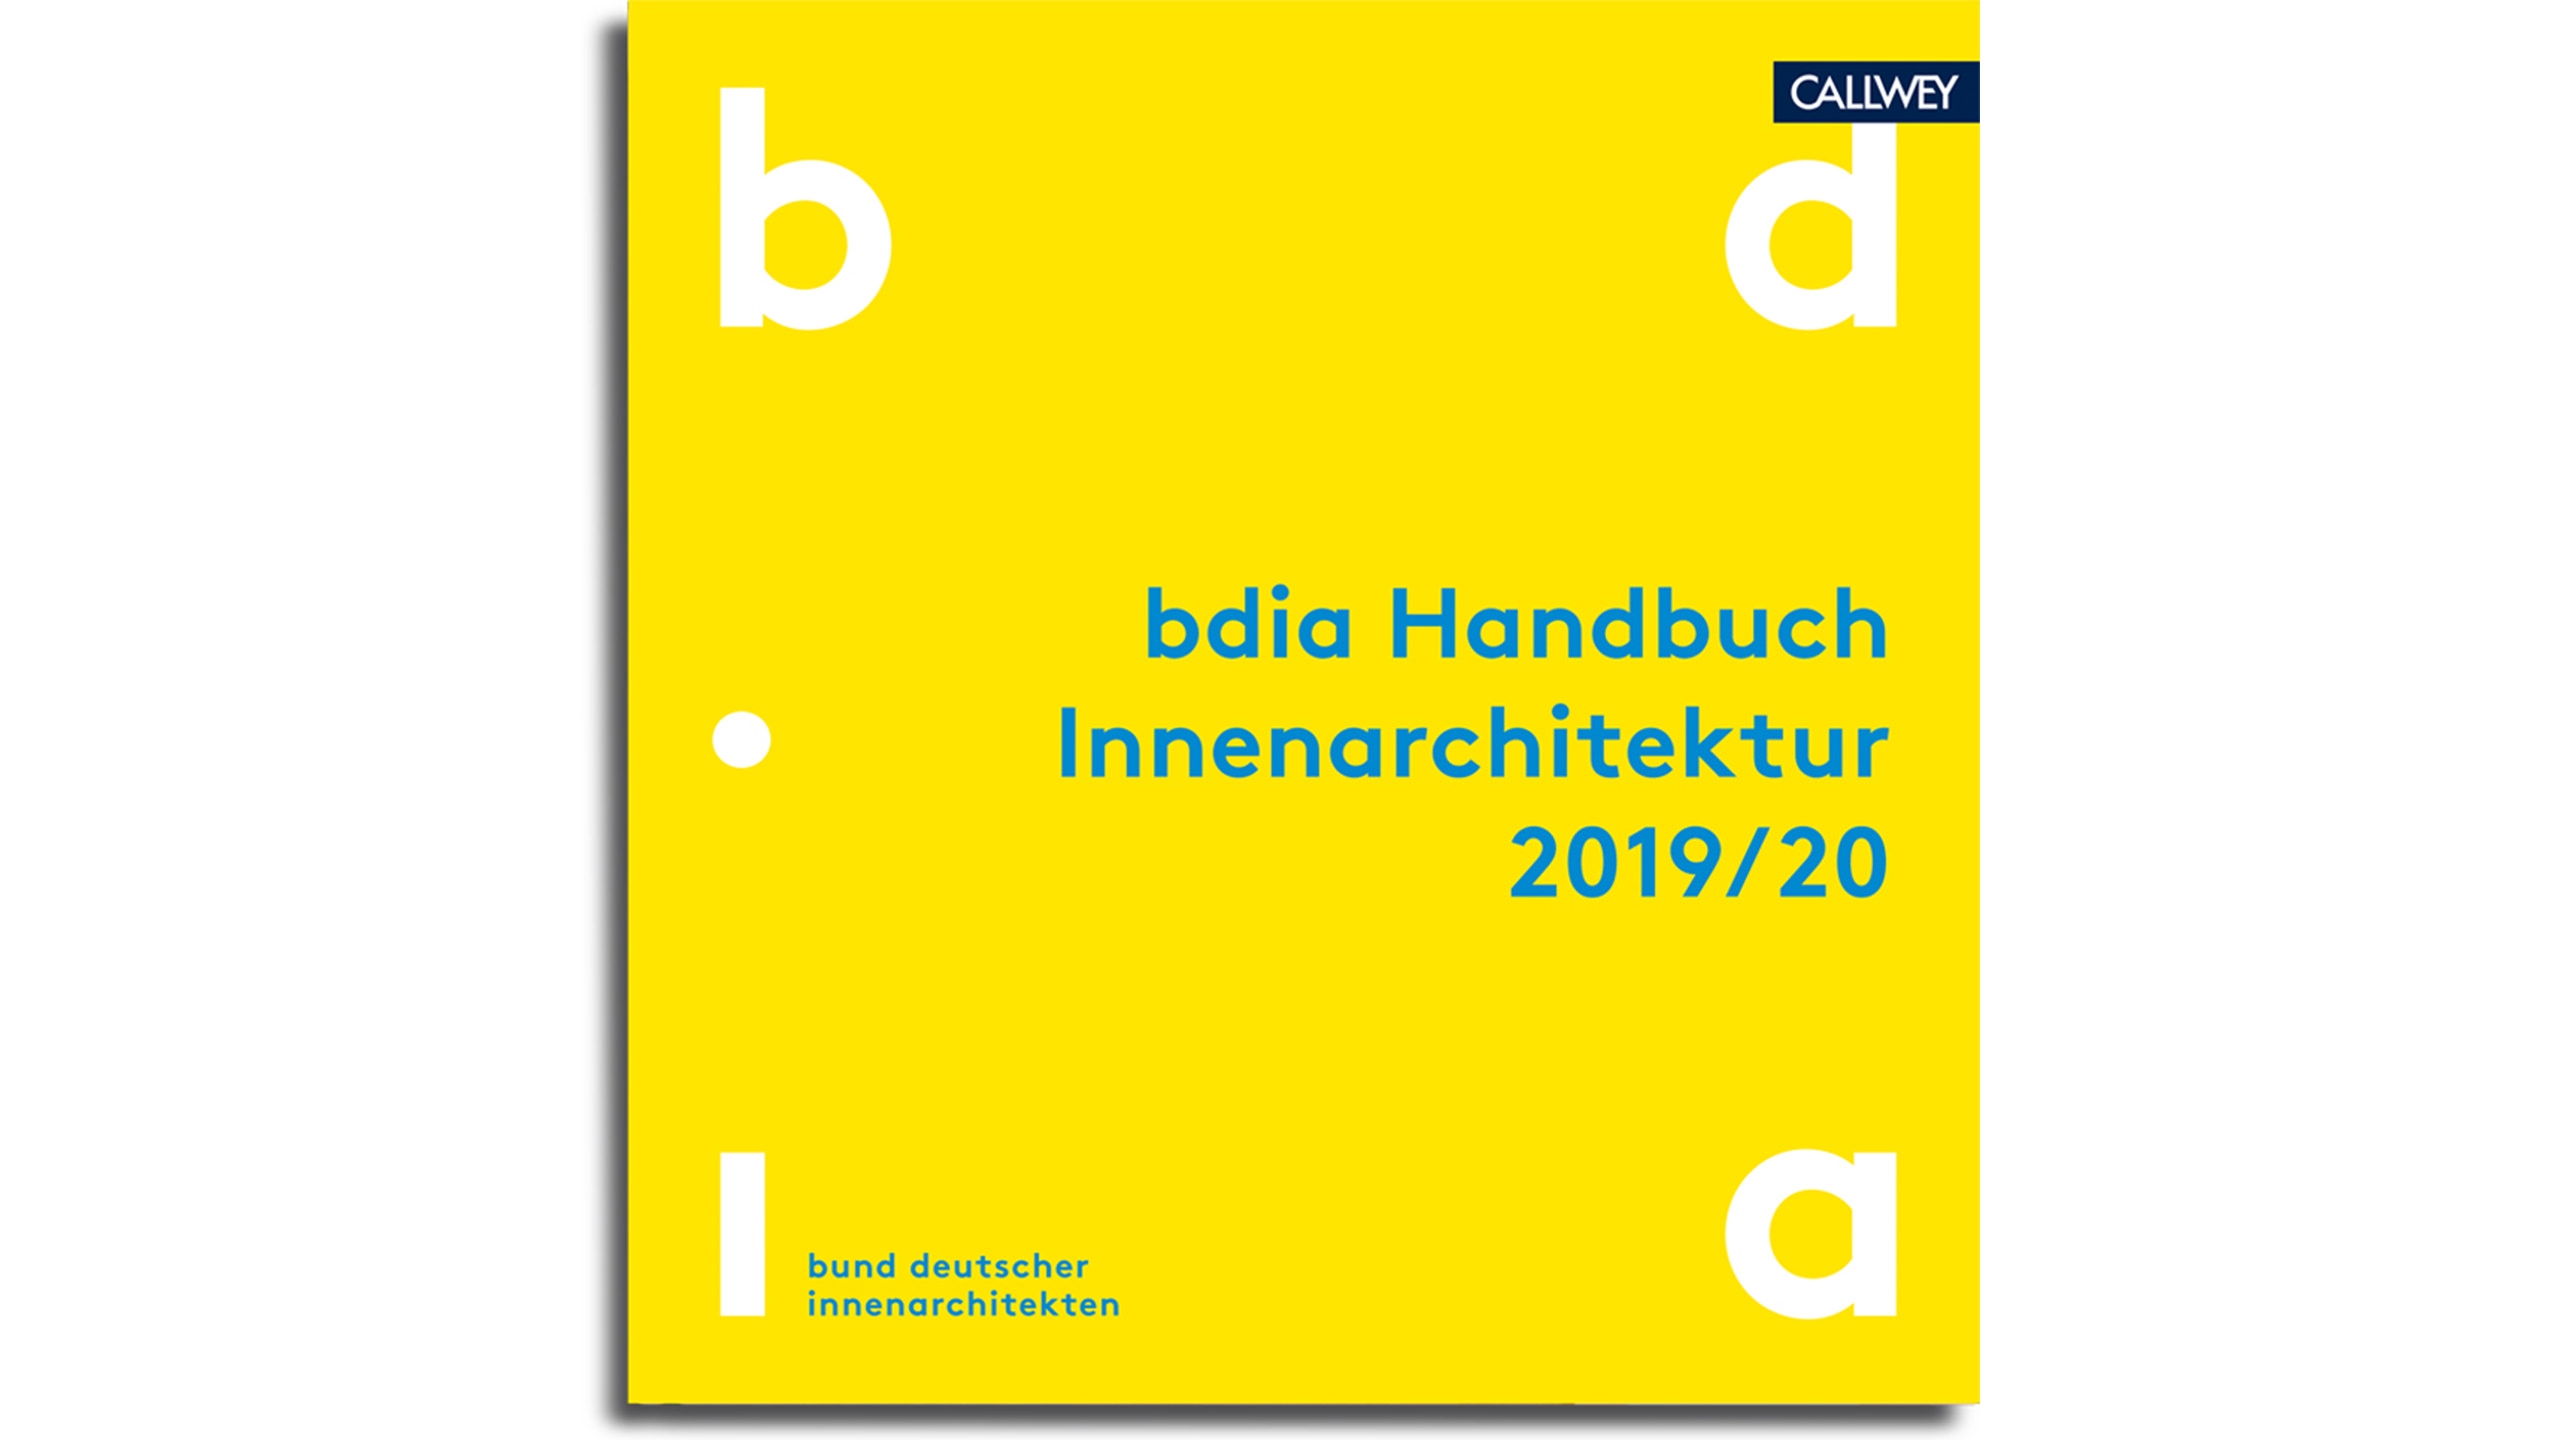 Arbeitsraum ist Lebensraum, BDIA Handbuch 2019-20